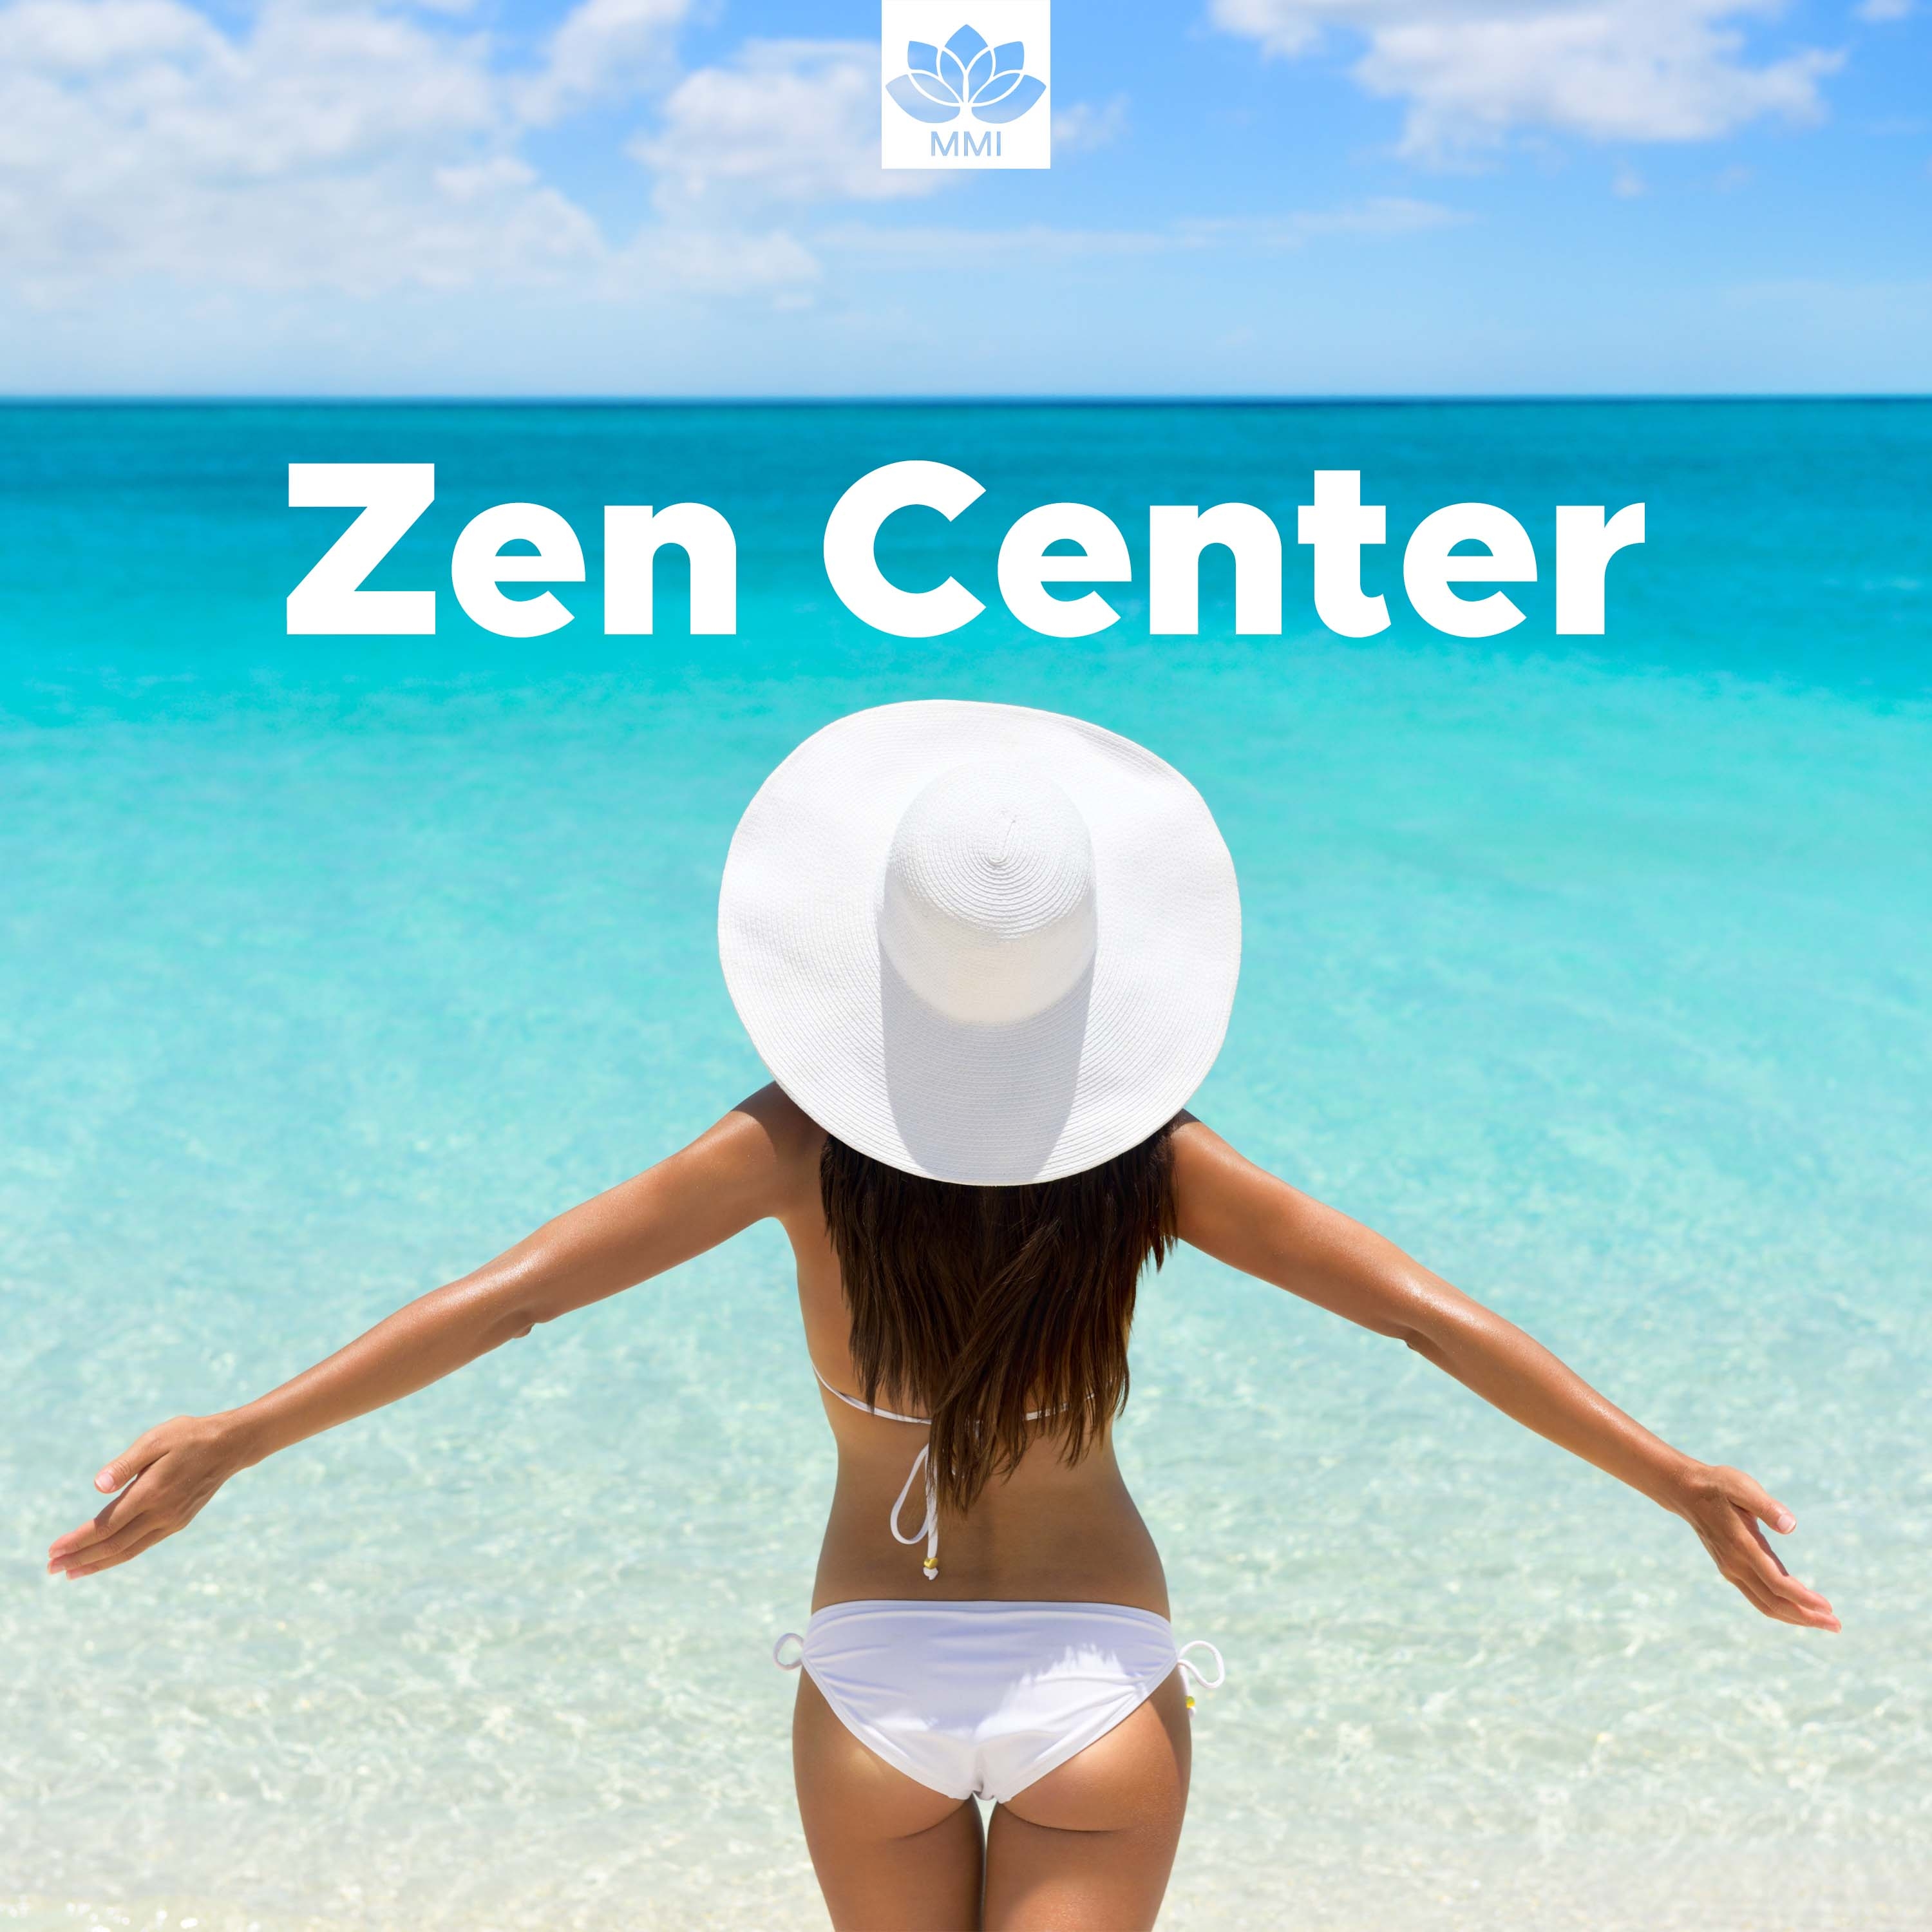 Zen Center